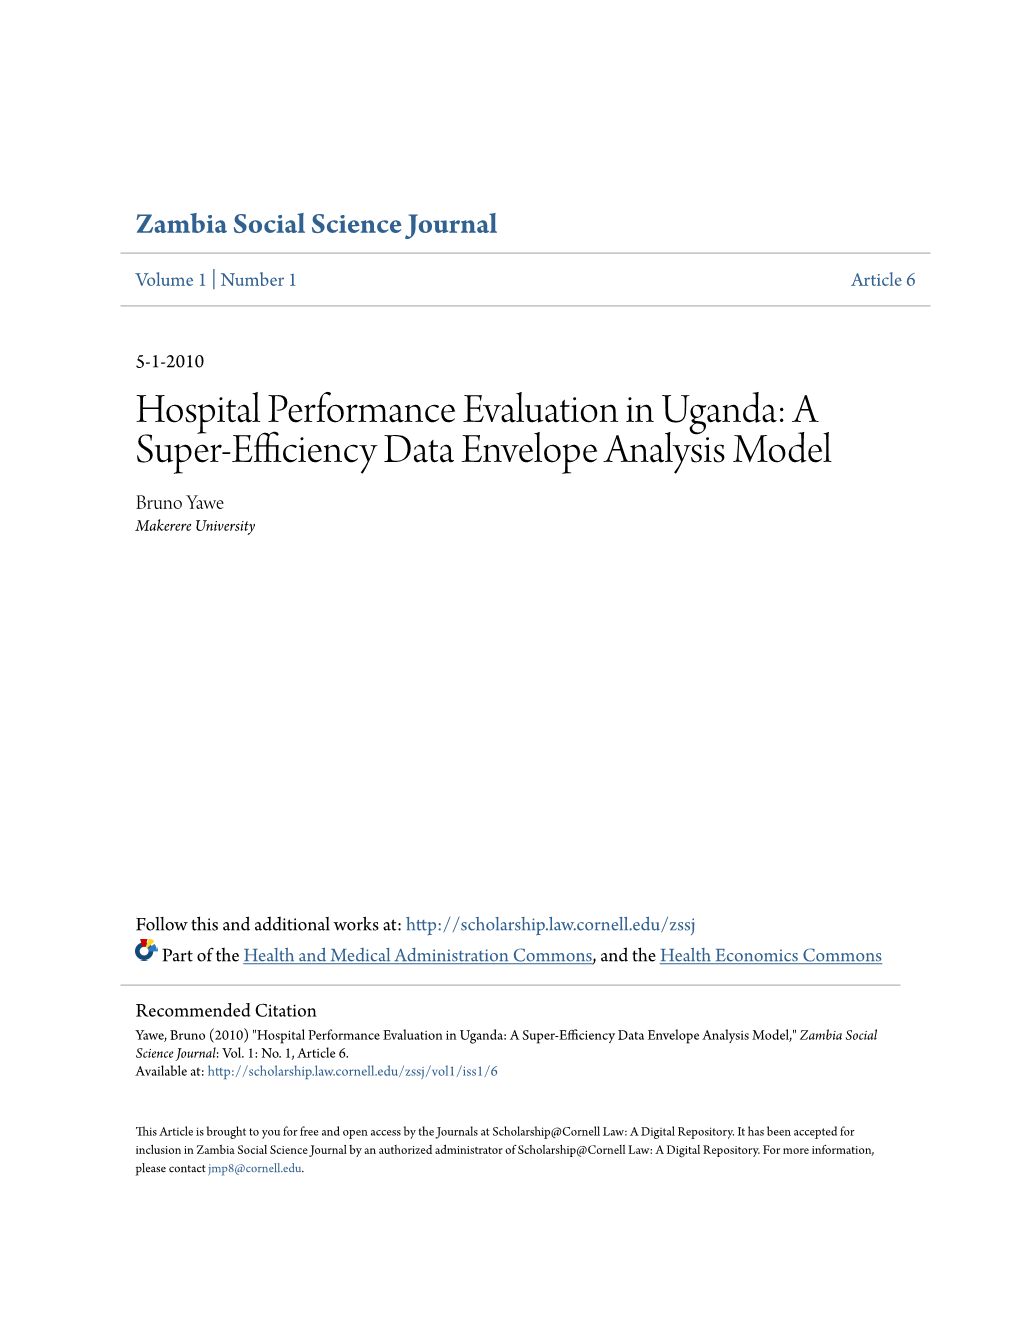 Hospital Performance Evaluation in Uganda: a Super-Efficiency Data Envelope Analysis Model Bruno Yawe Makerere University